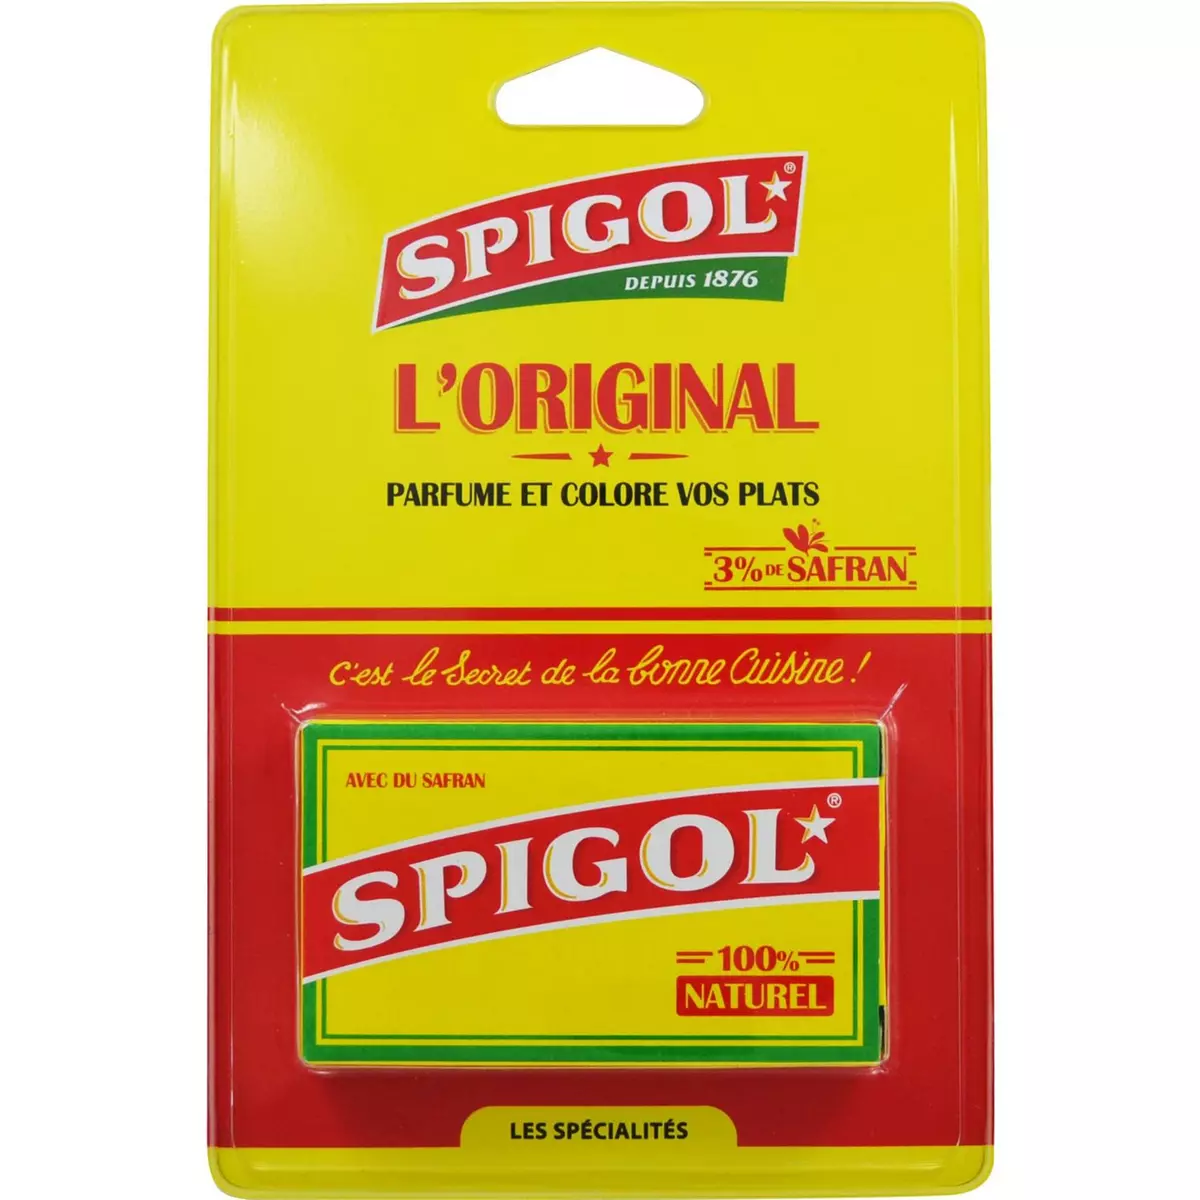 SPIGOL L'original au safran 100% naturel 4x14g